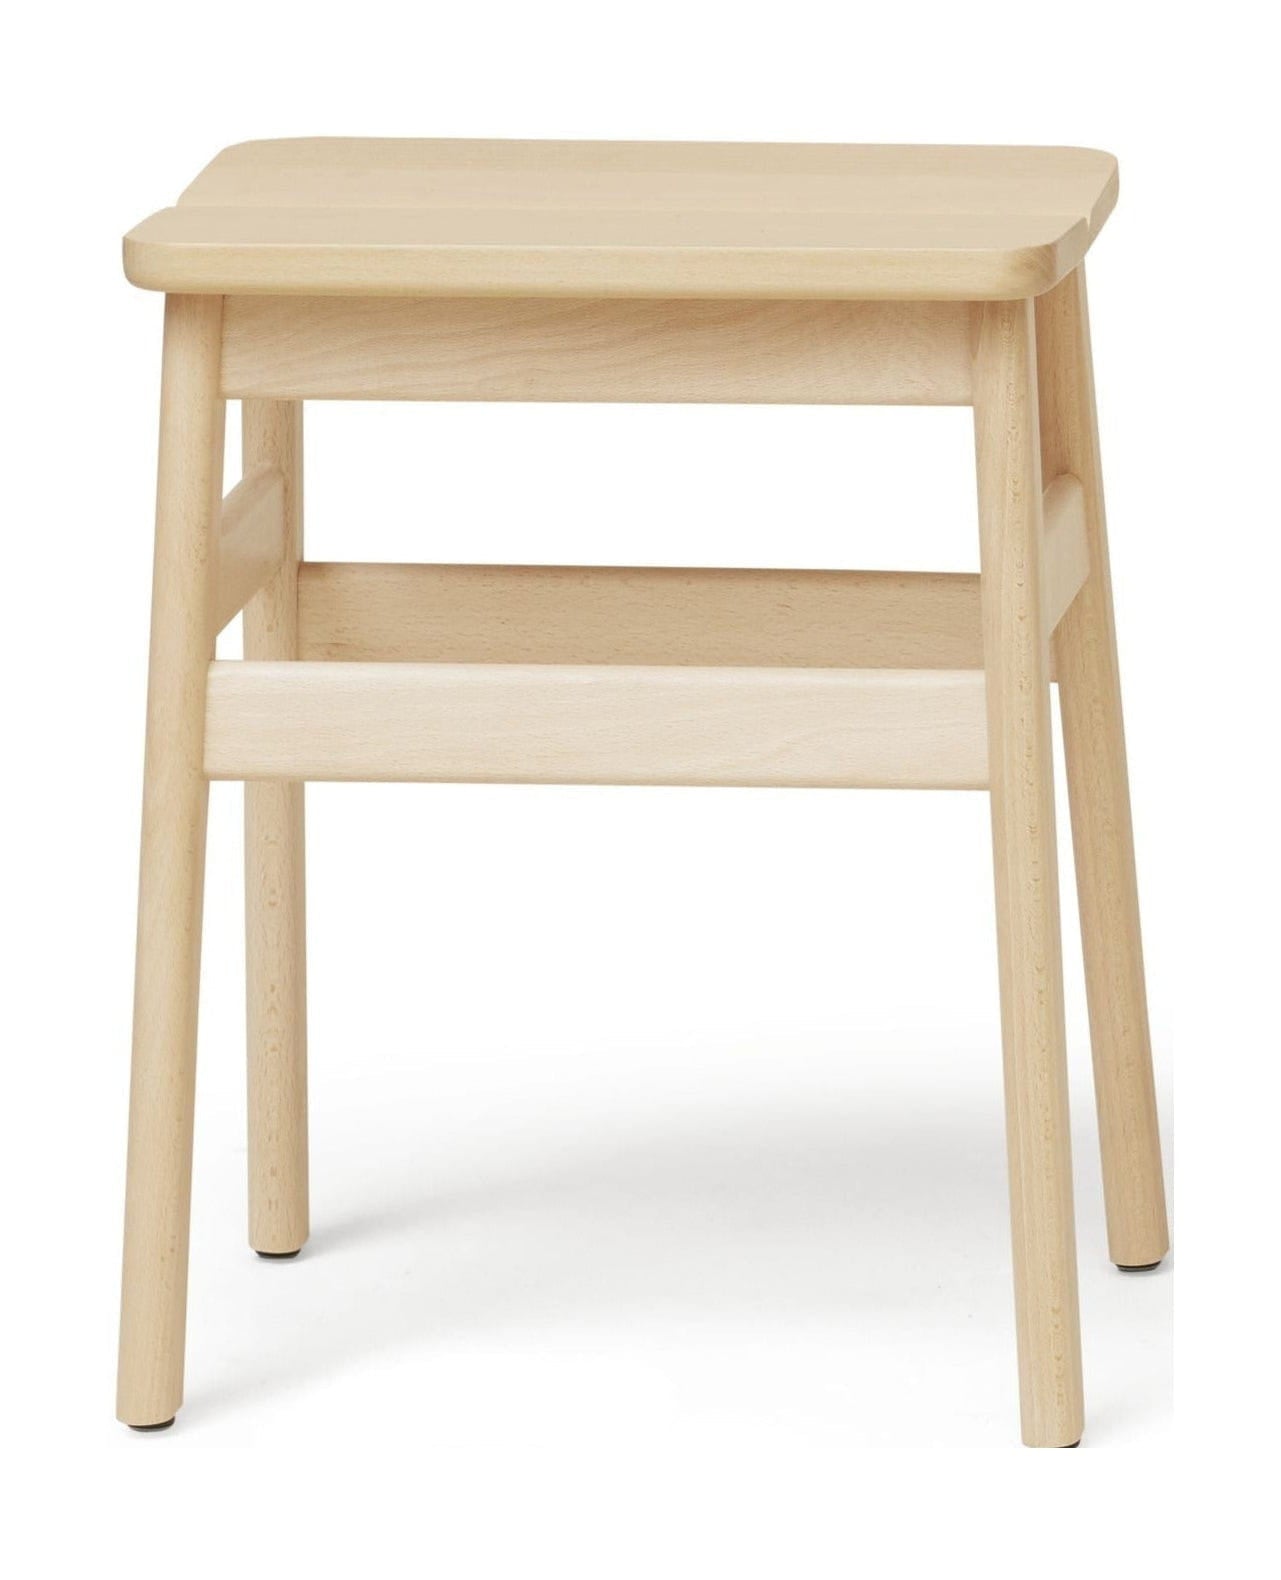 Form & Refine Angle Standard Stuhl 45 cm. Buche